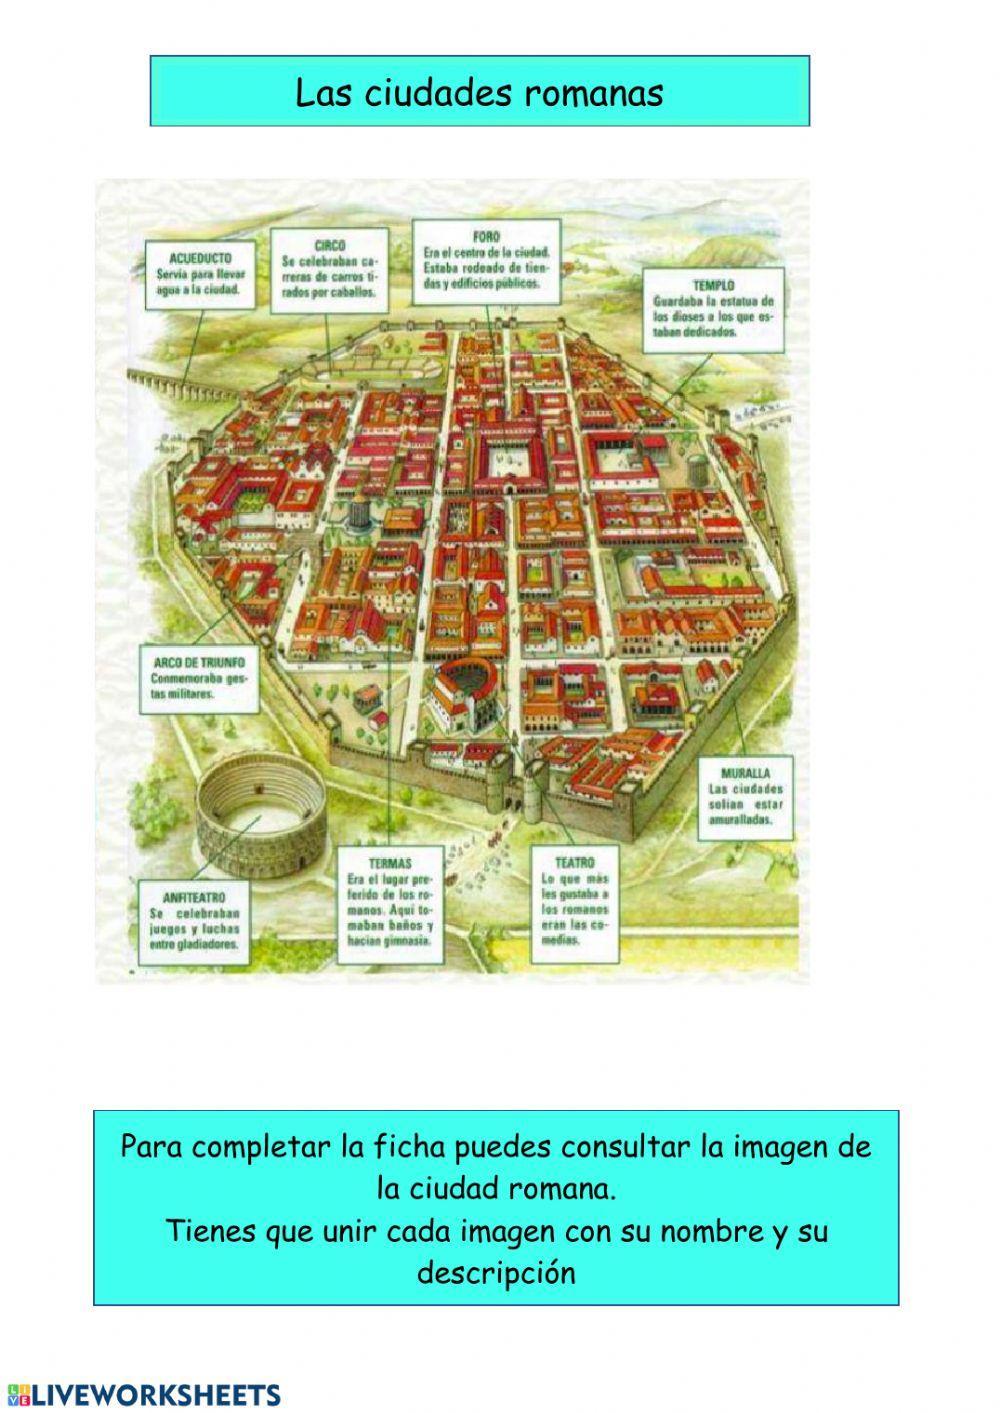 La ciudad romana